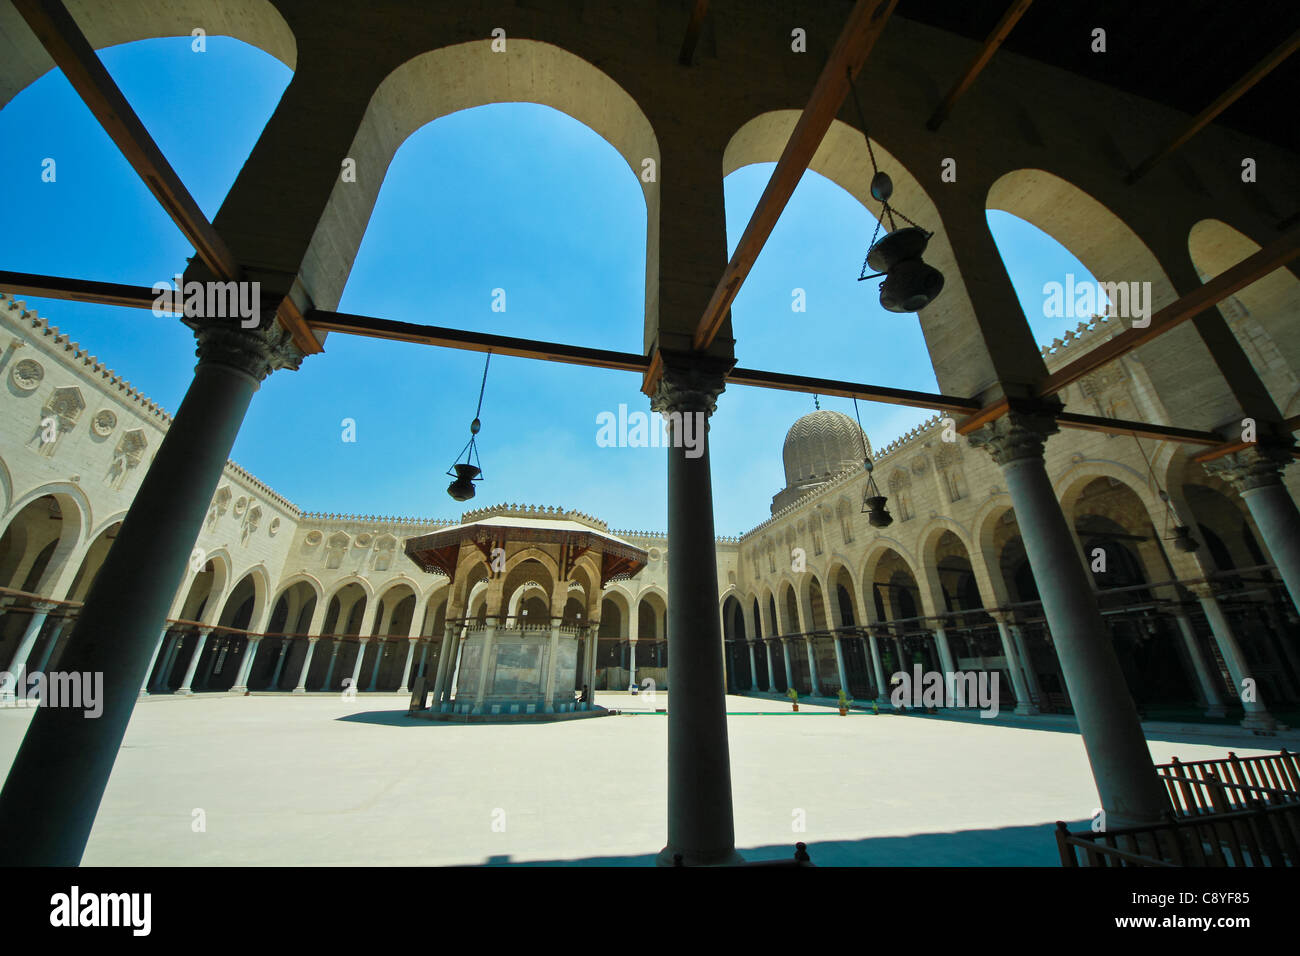 Mosque of Sultan Al-Mu'ayyad Sheikh, City of Cairo, Egypt Stock Photo